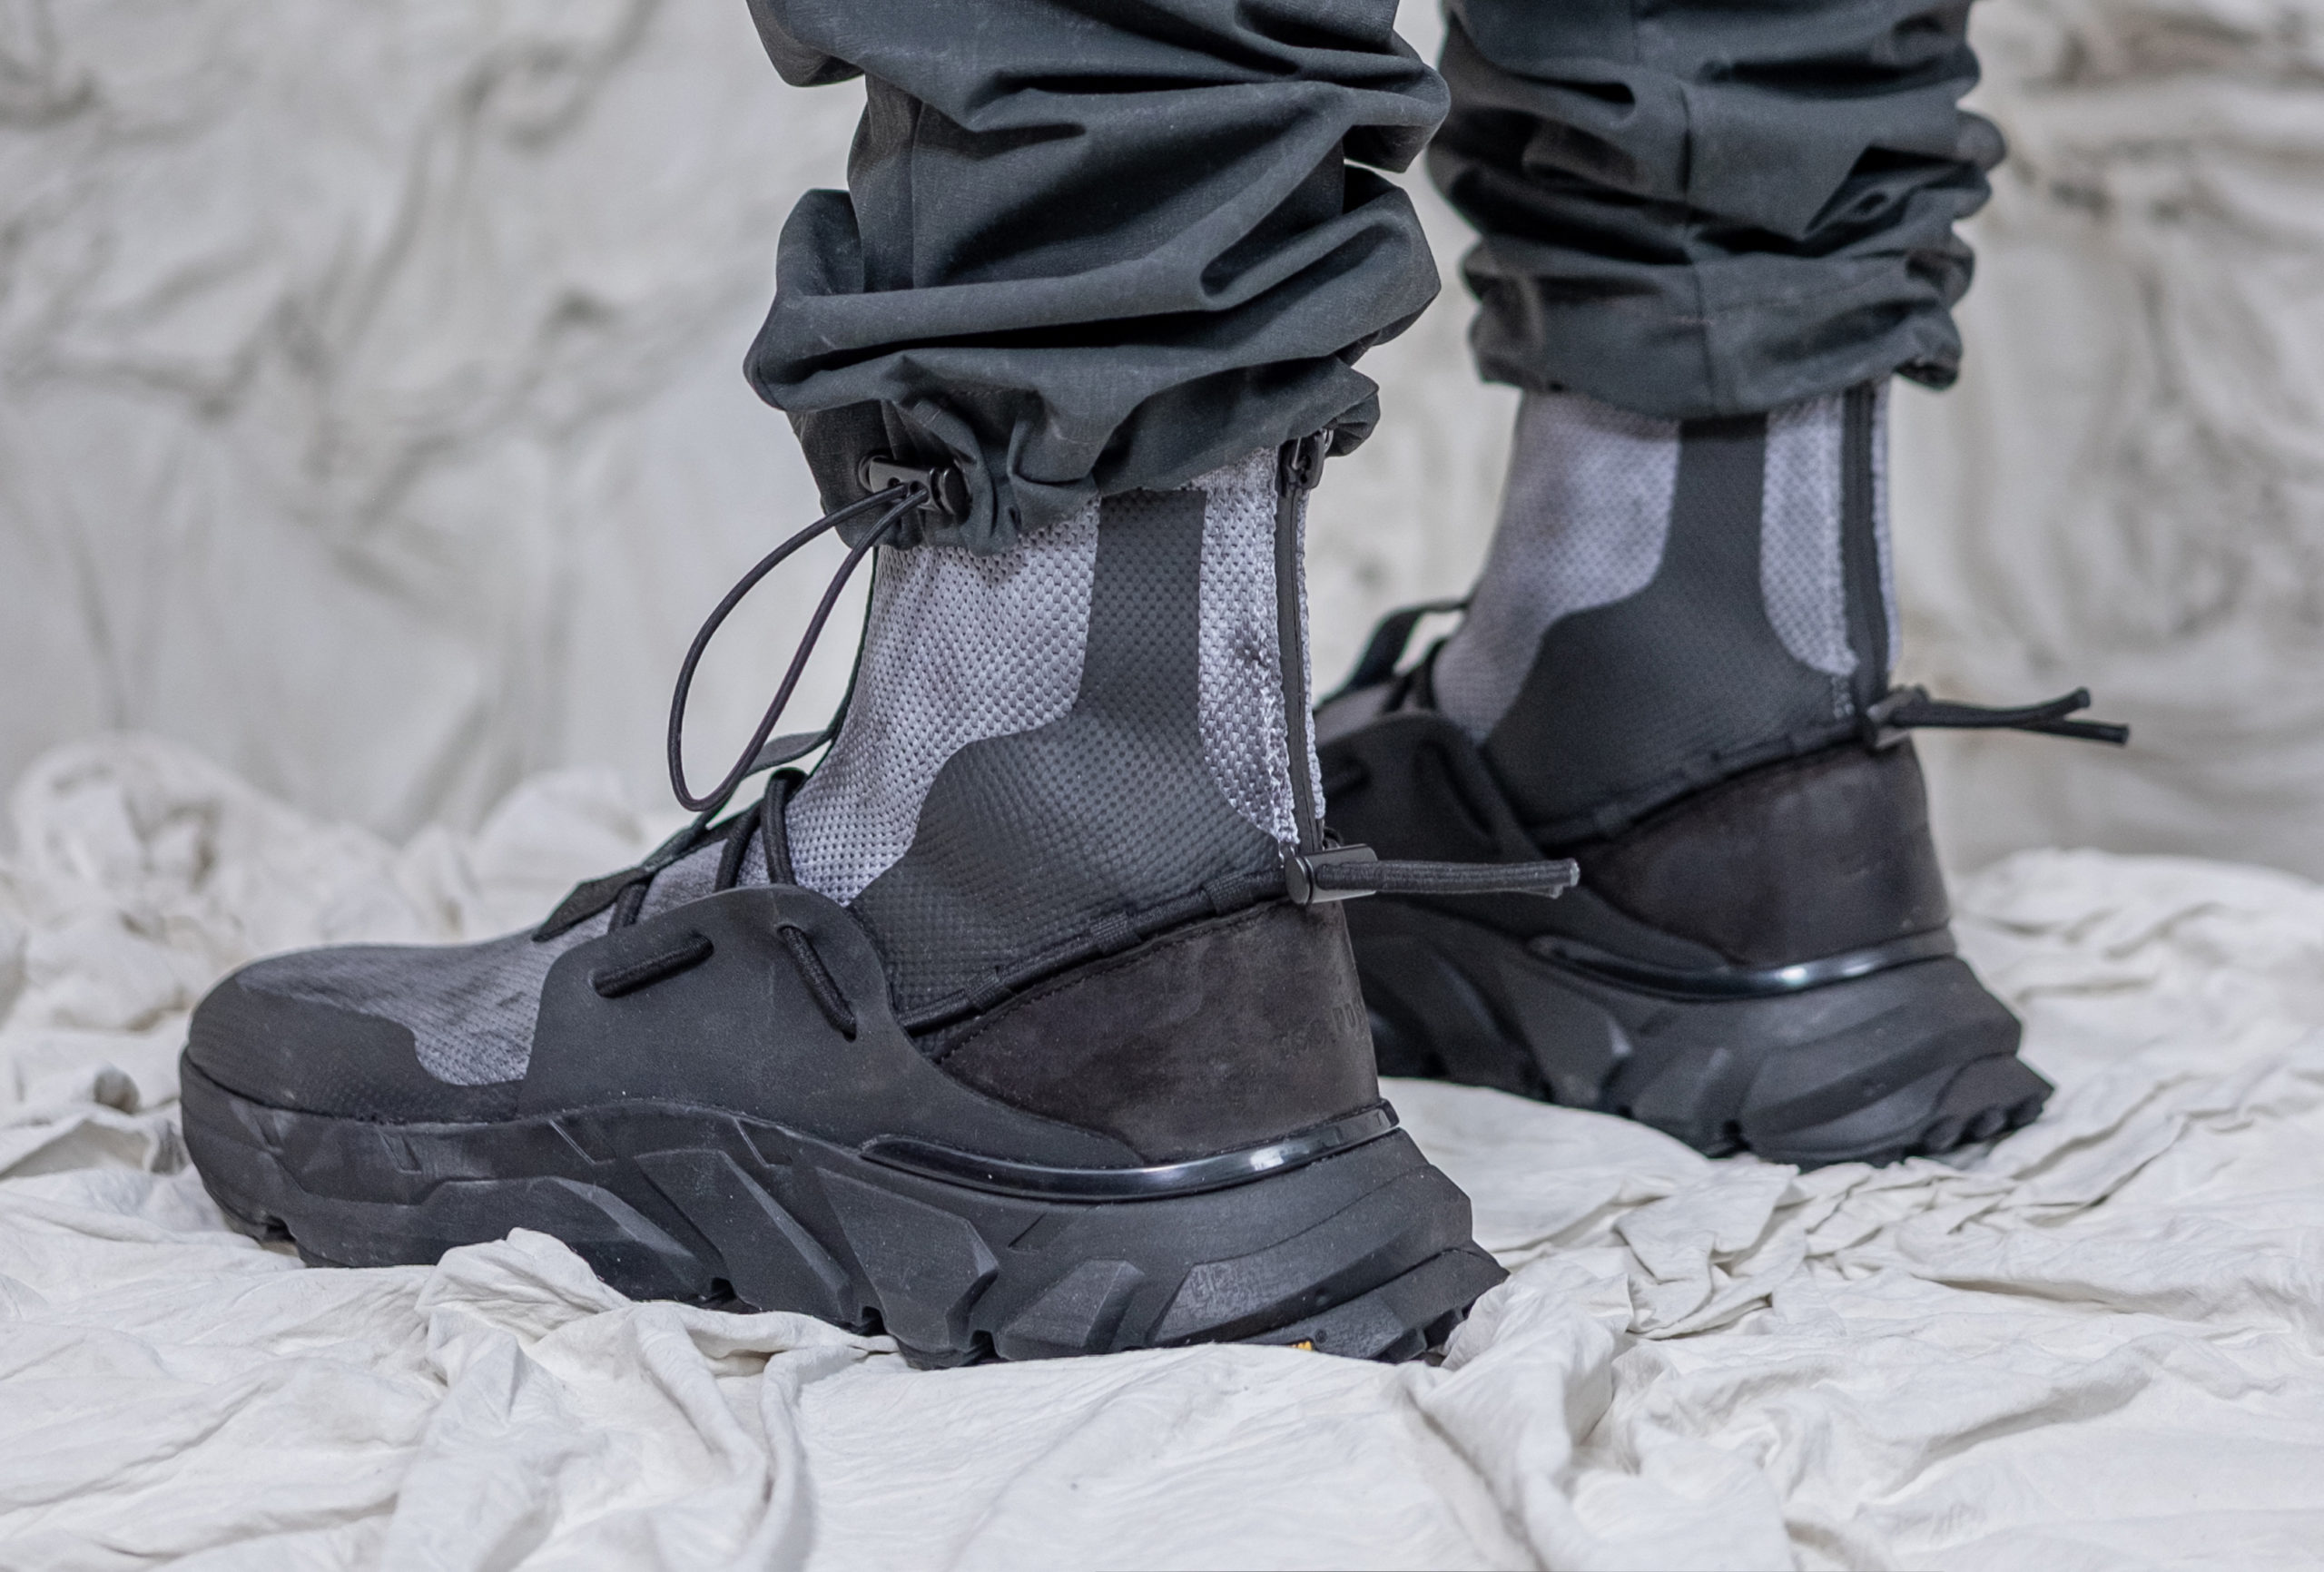 TOBIAS BIRK NIELSEN Releases Technical Sneaker-Boot Hybrid – PAUSE Online Men's Fashion, Street Style, Fashion News & Streetwear